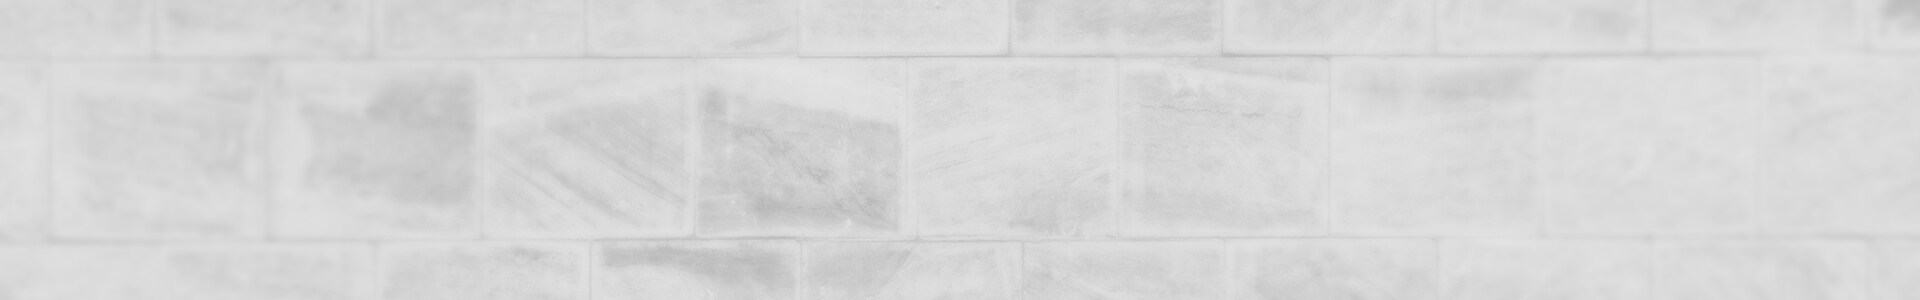 3x6 white subway tile shower, wavy edge subway tile